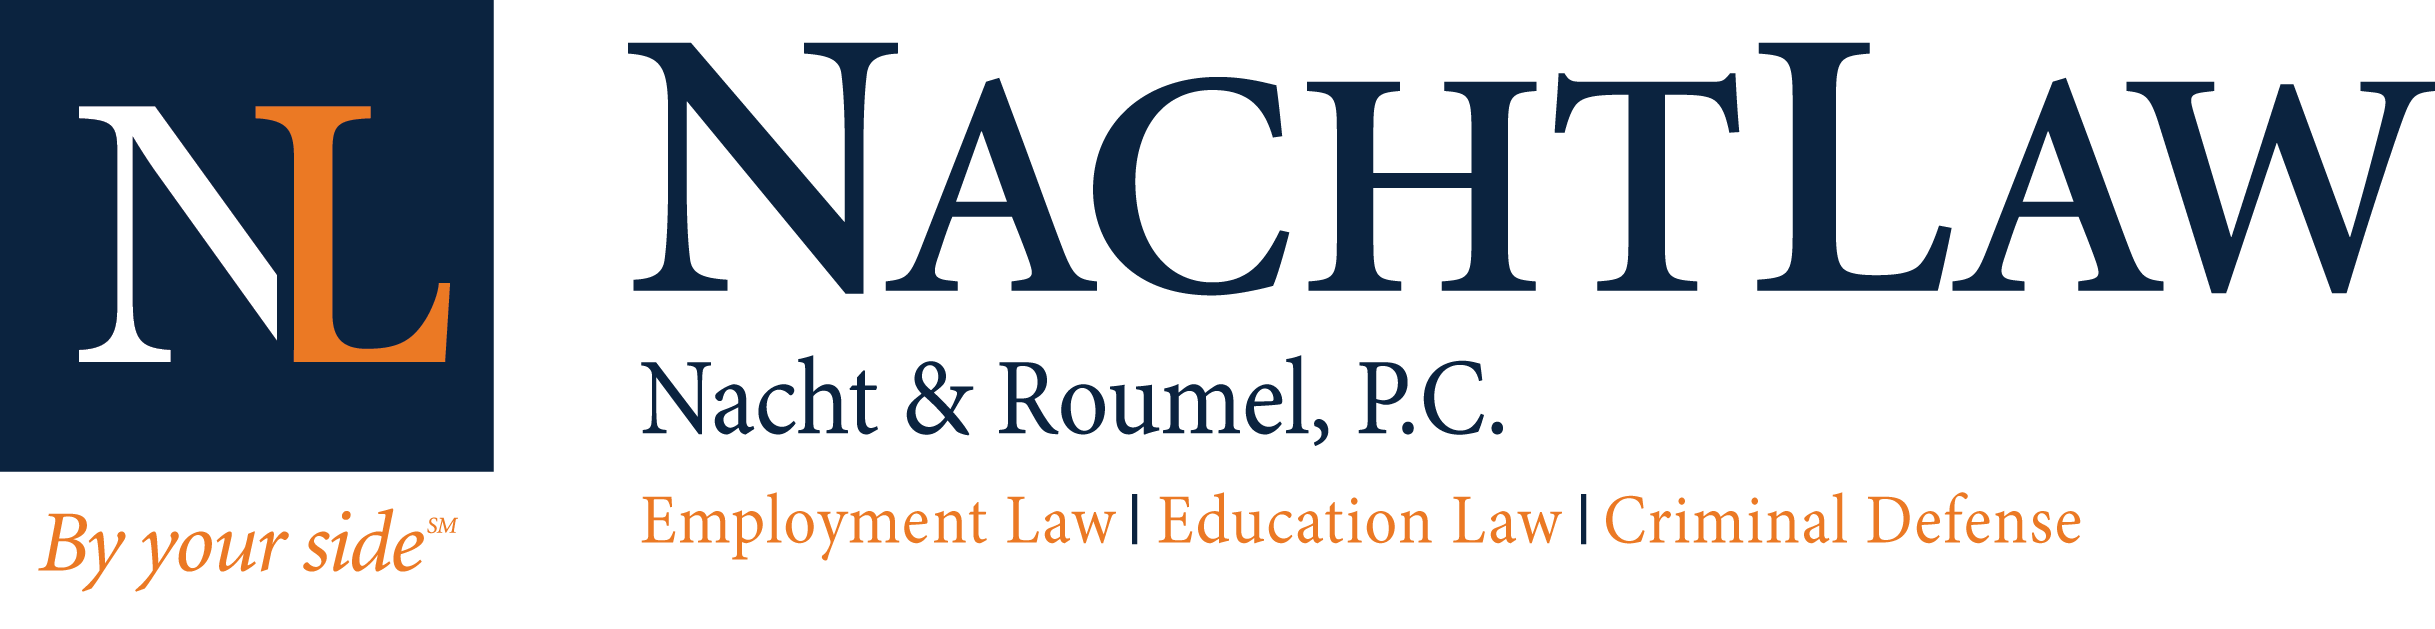 NachtLaw - Nacht & Roumel, P.C. – Employment Law – Education Law – Criminal Defense – By your side